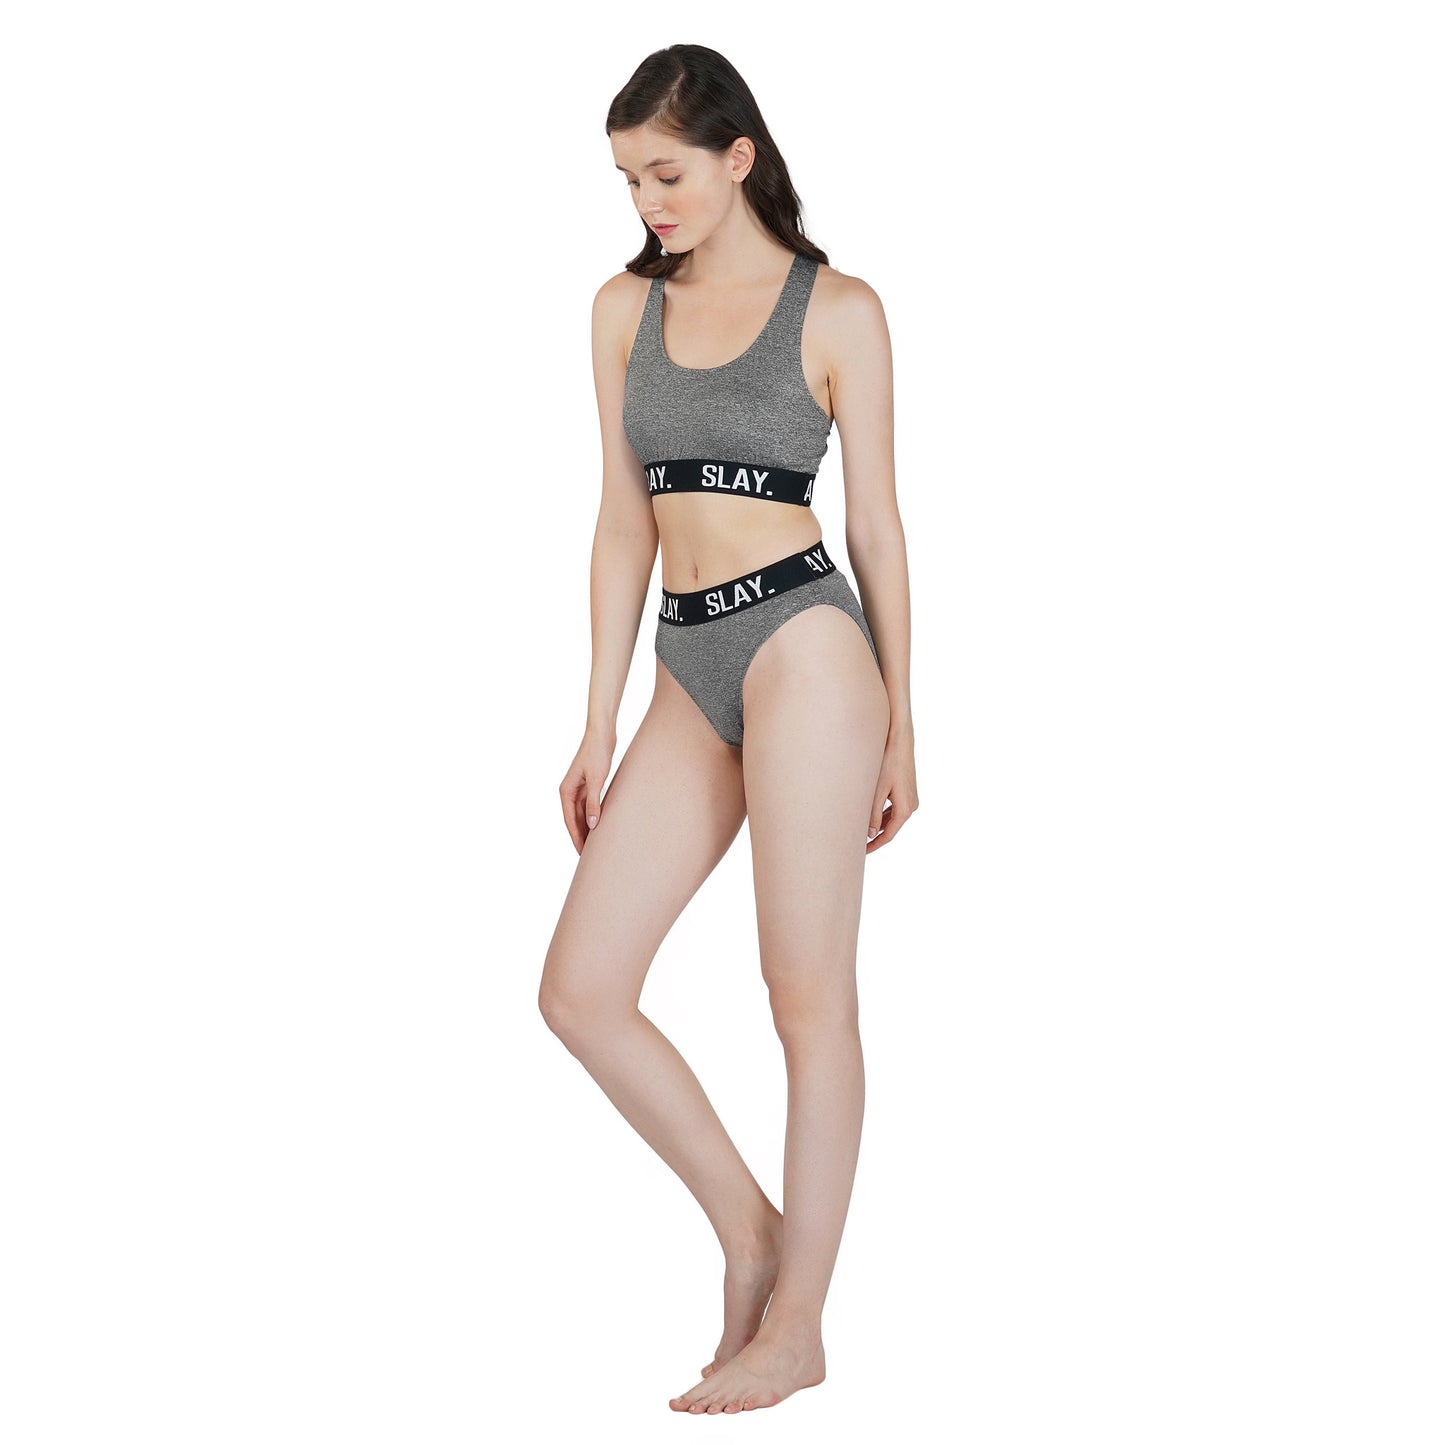 SLAY. Women's Grey Underwear Lingerie Modern Sports Bra and Panty Co-ord Set